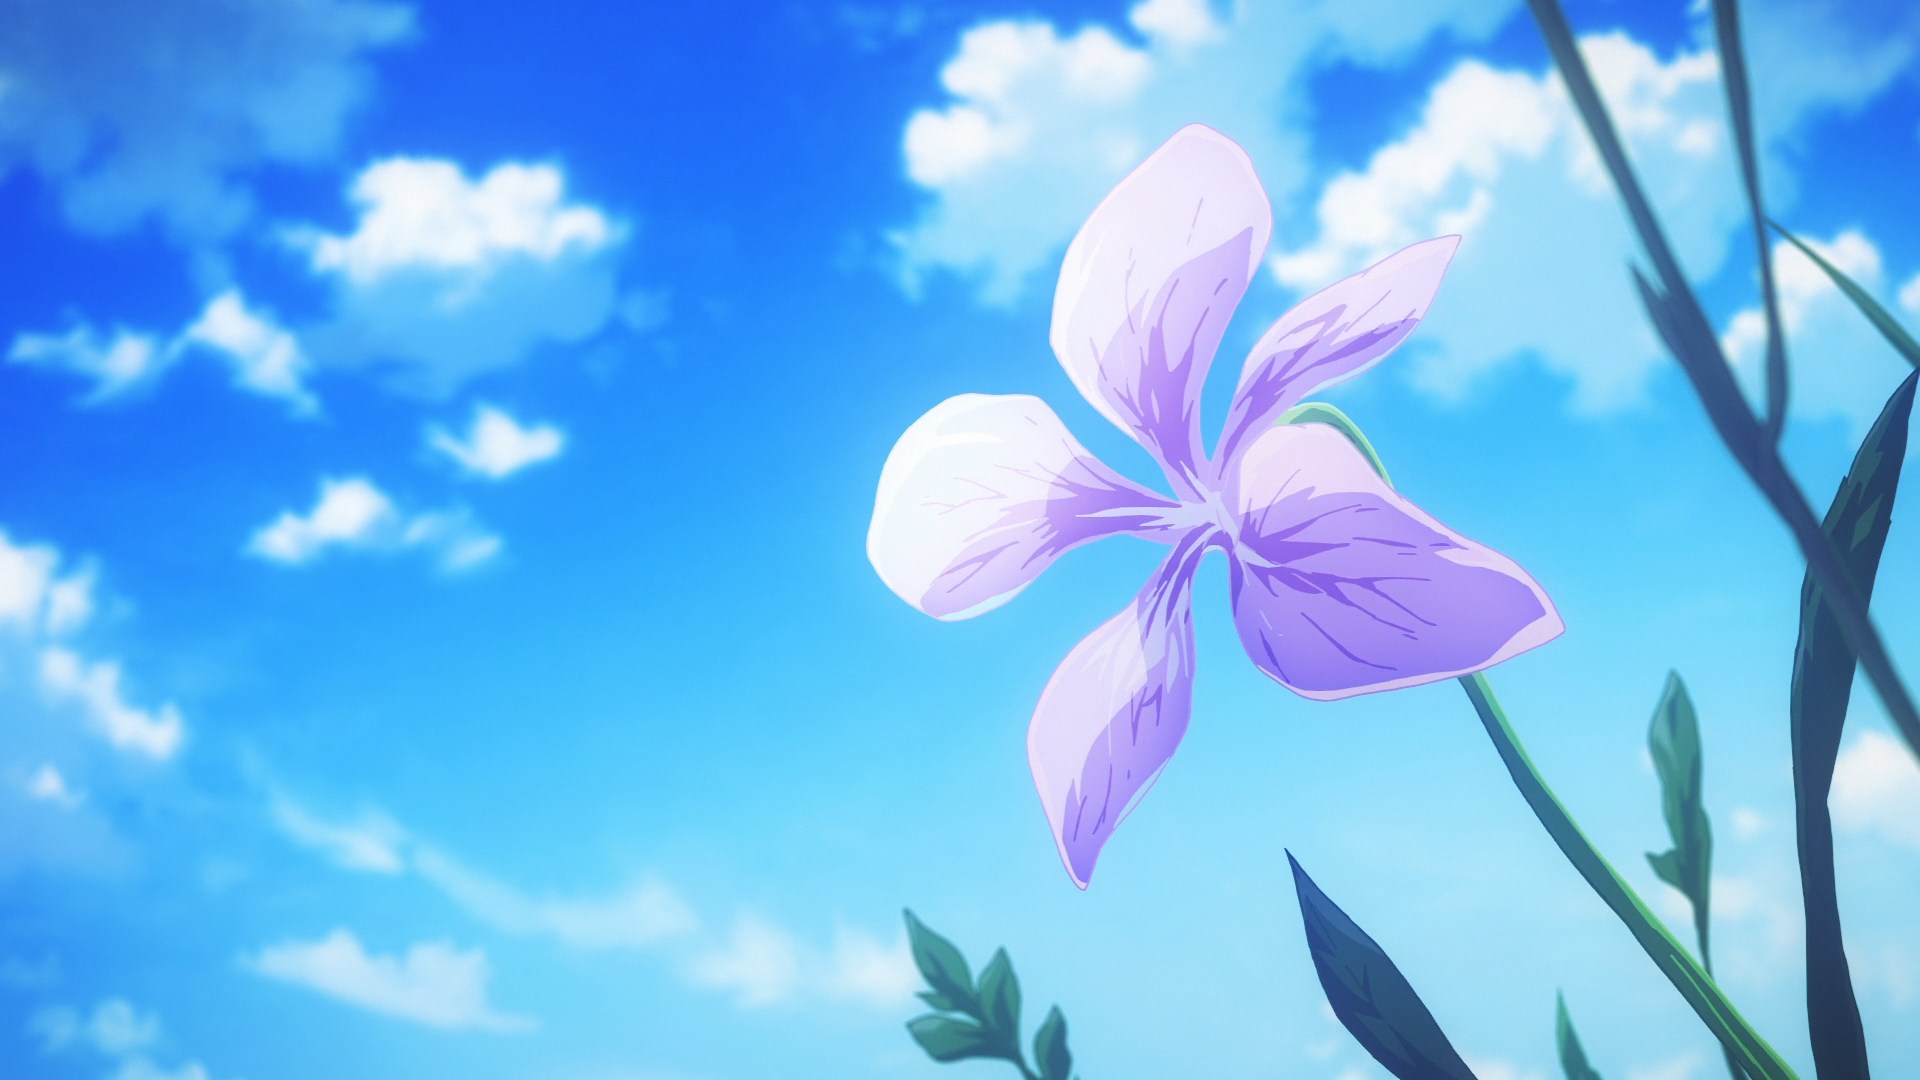 Anime Landscape: Anime beautiful flower landscape